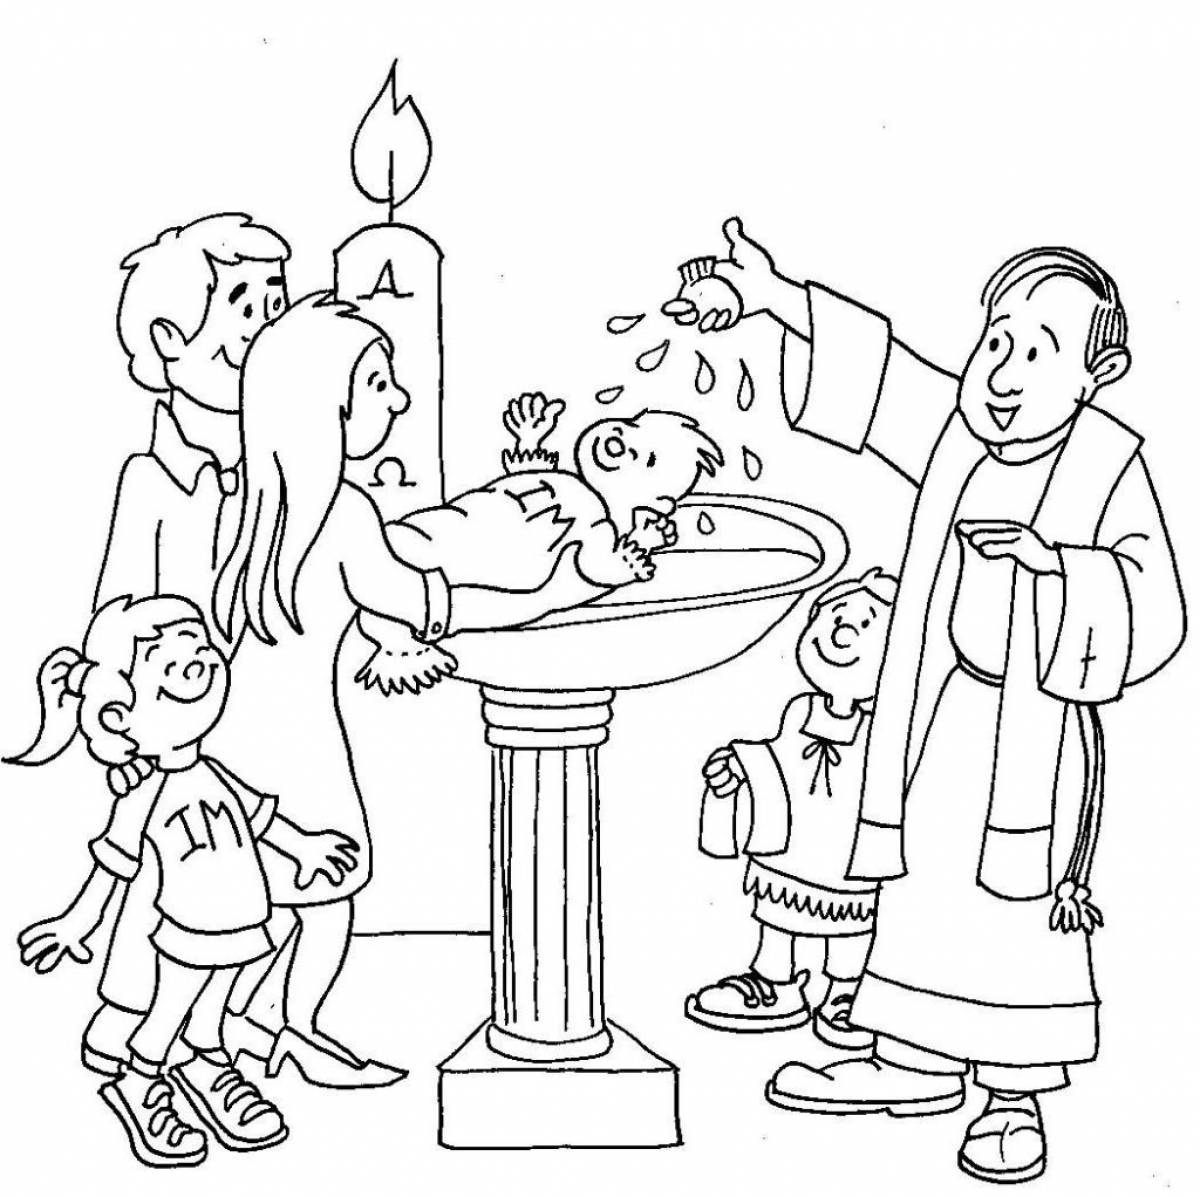 On baptism #1